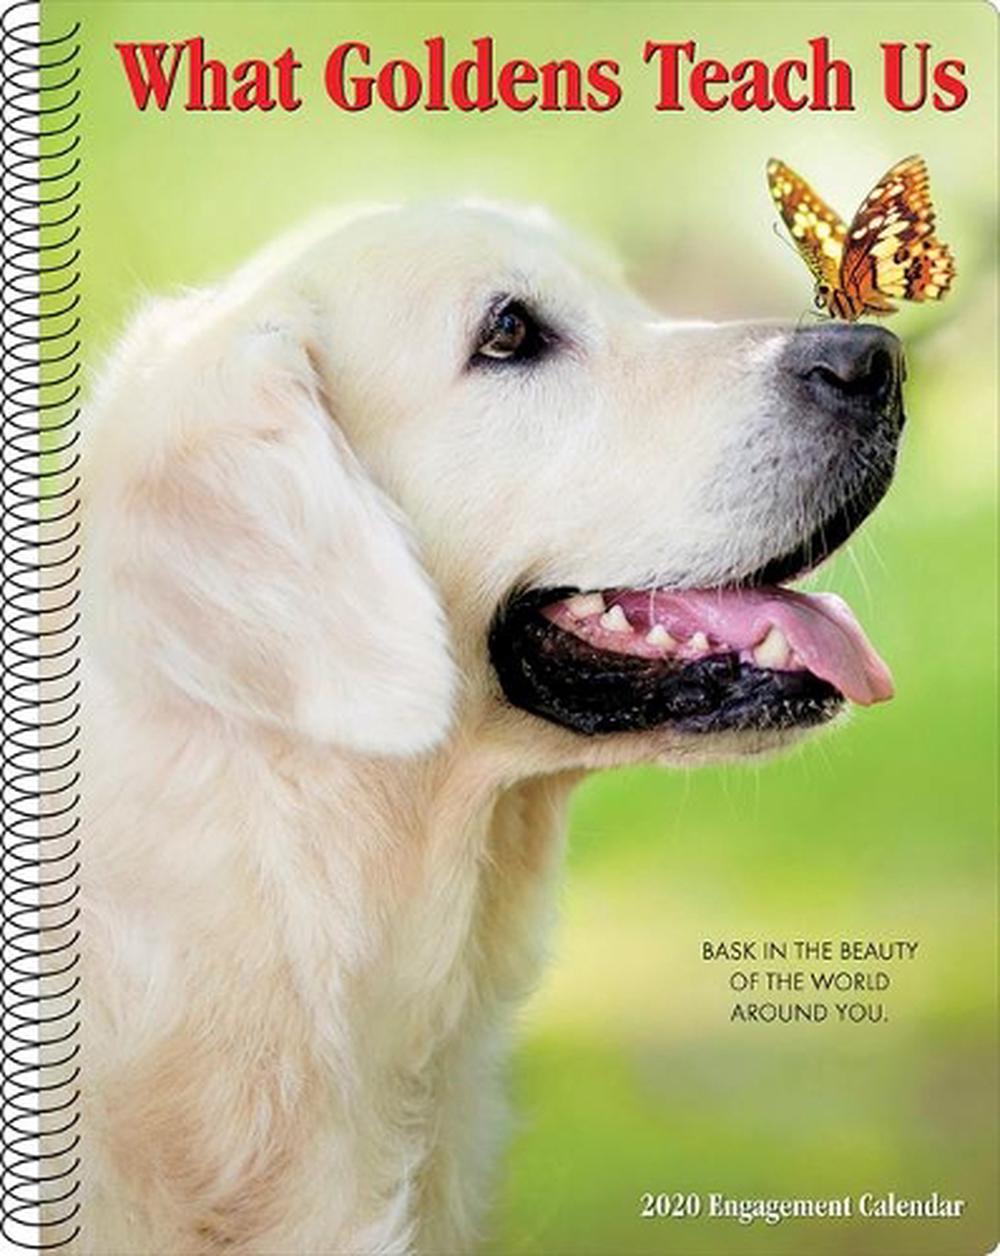 What Goldens Teach Us 2020 Engagement Calendar (Dog Breed Calendar) by